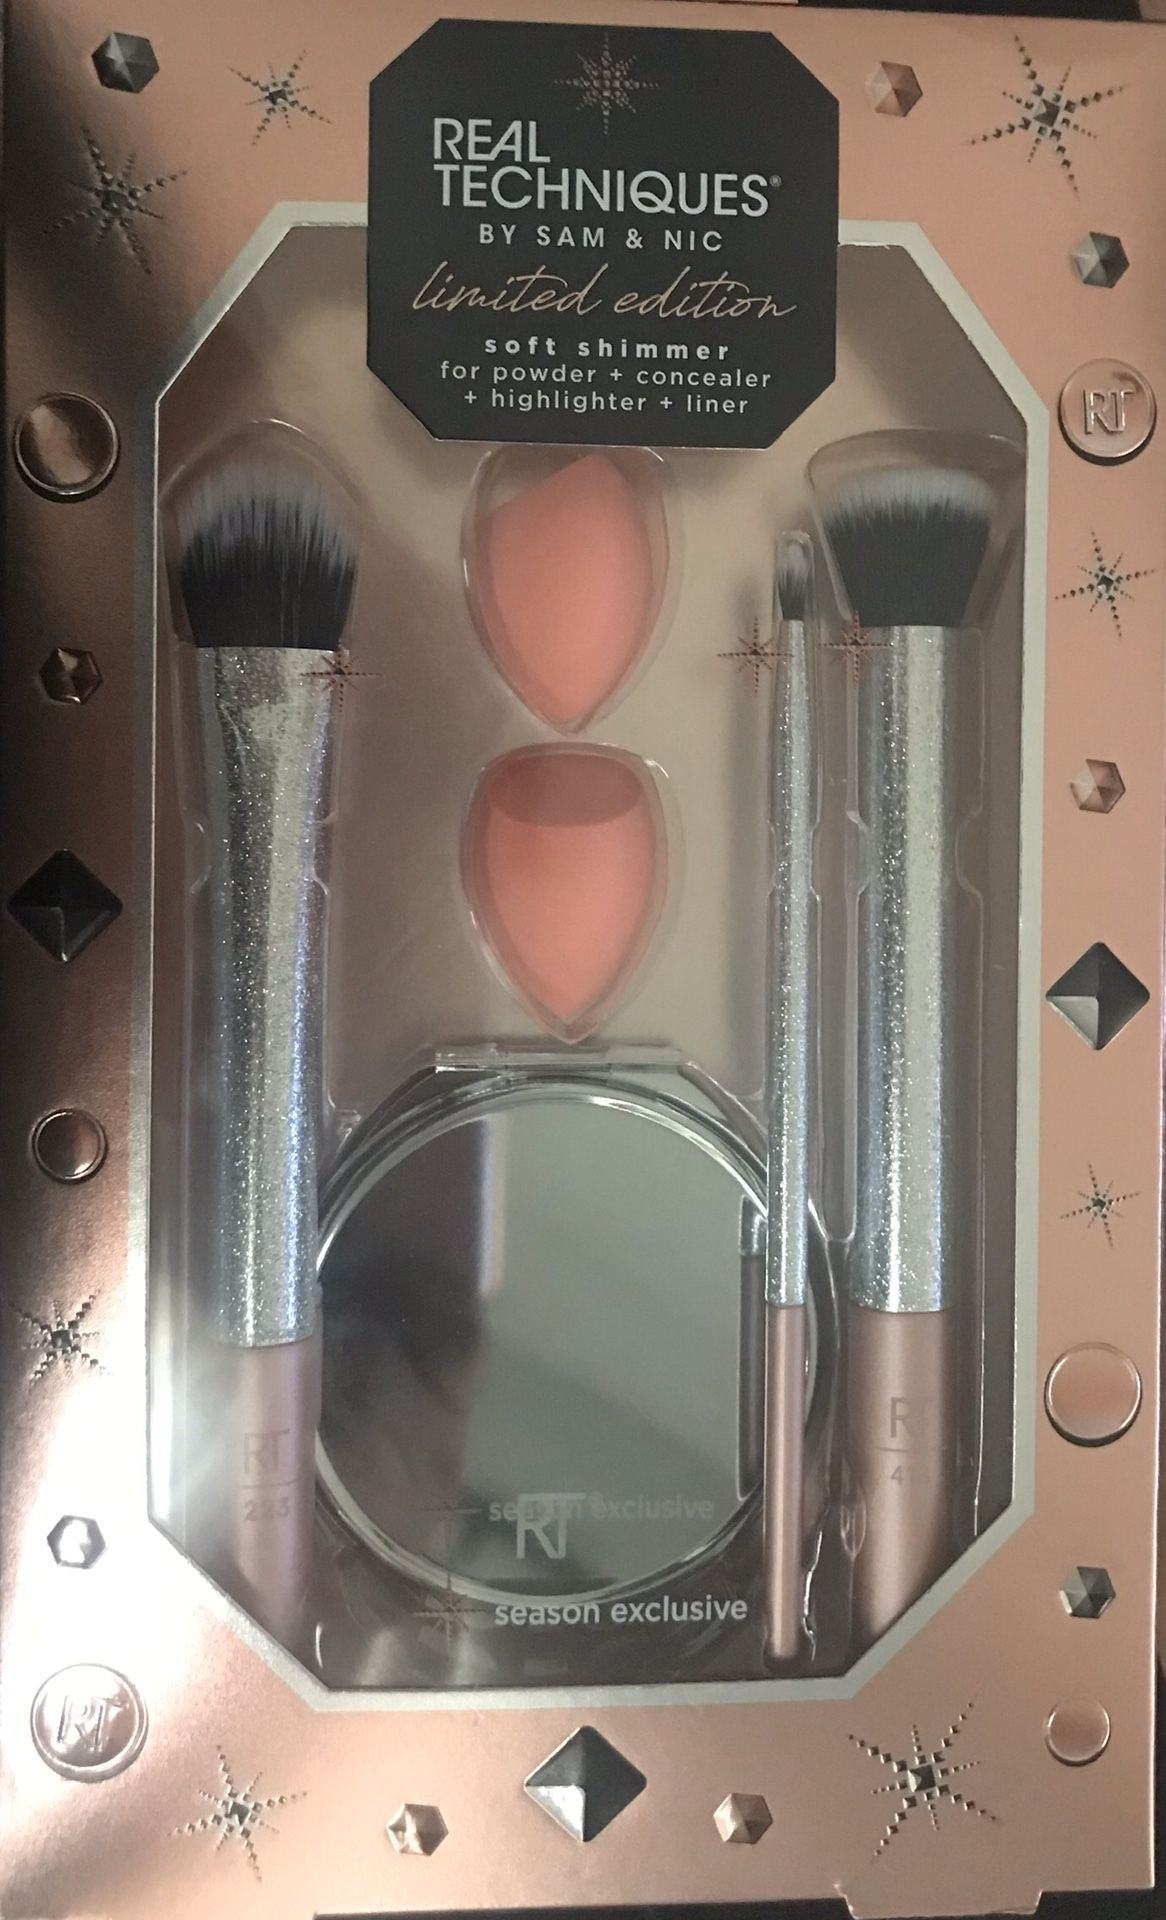 Real techniques makeup brush set